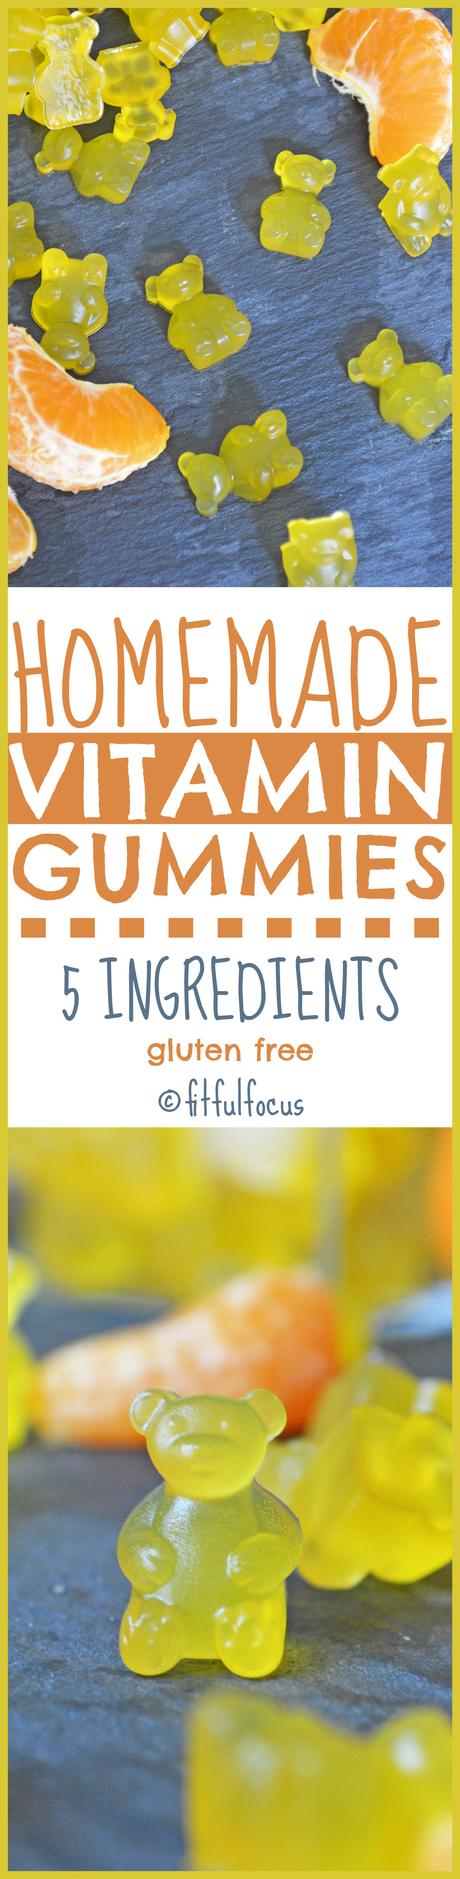 Homemade Vitamin Gummies